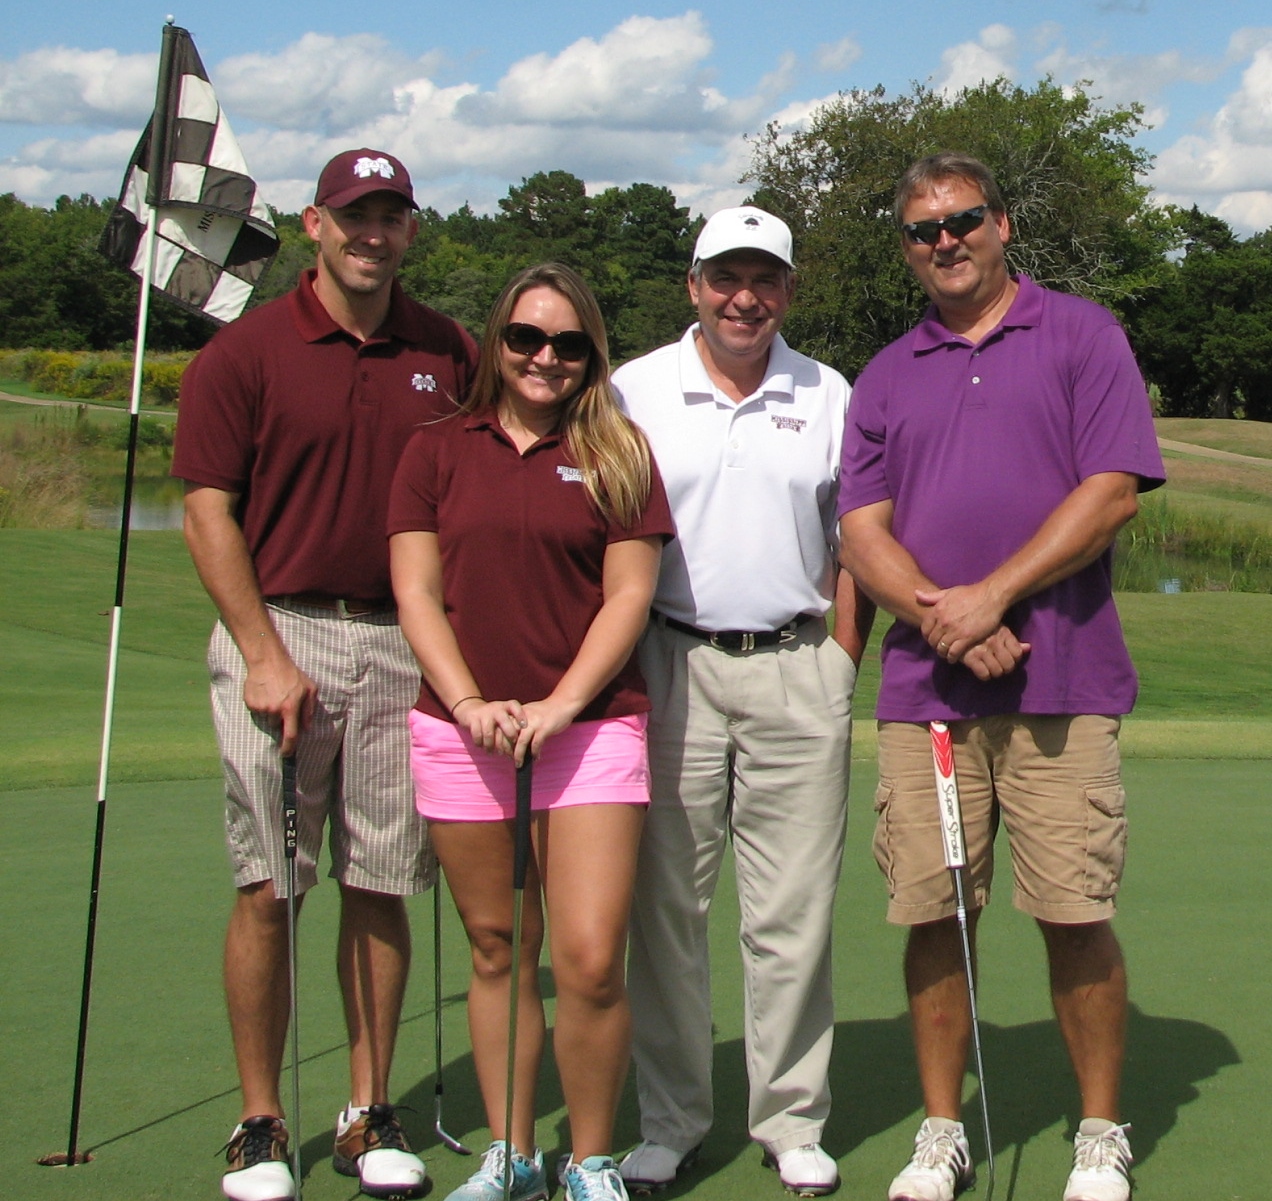 Winning golf team members included (l-r) Wade Stewart, Paige Watson, Randy Romero and Charles Watson.